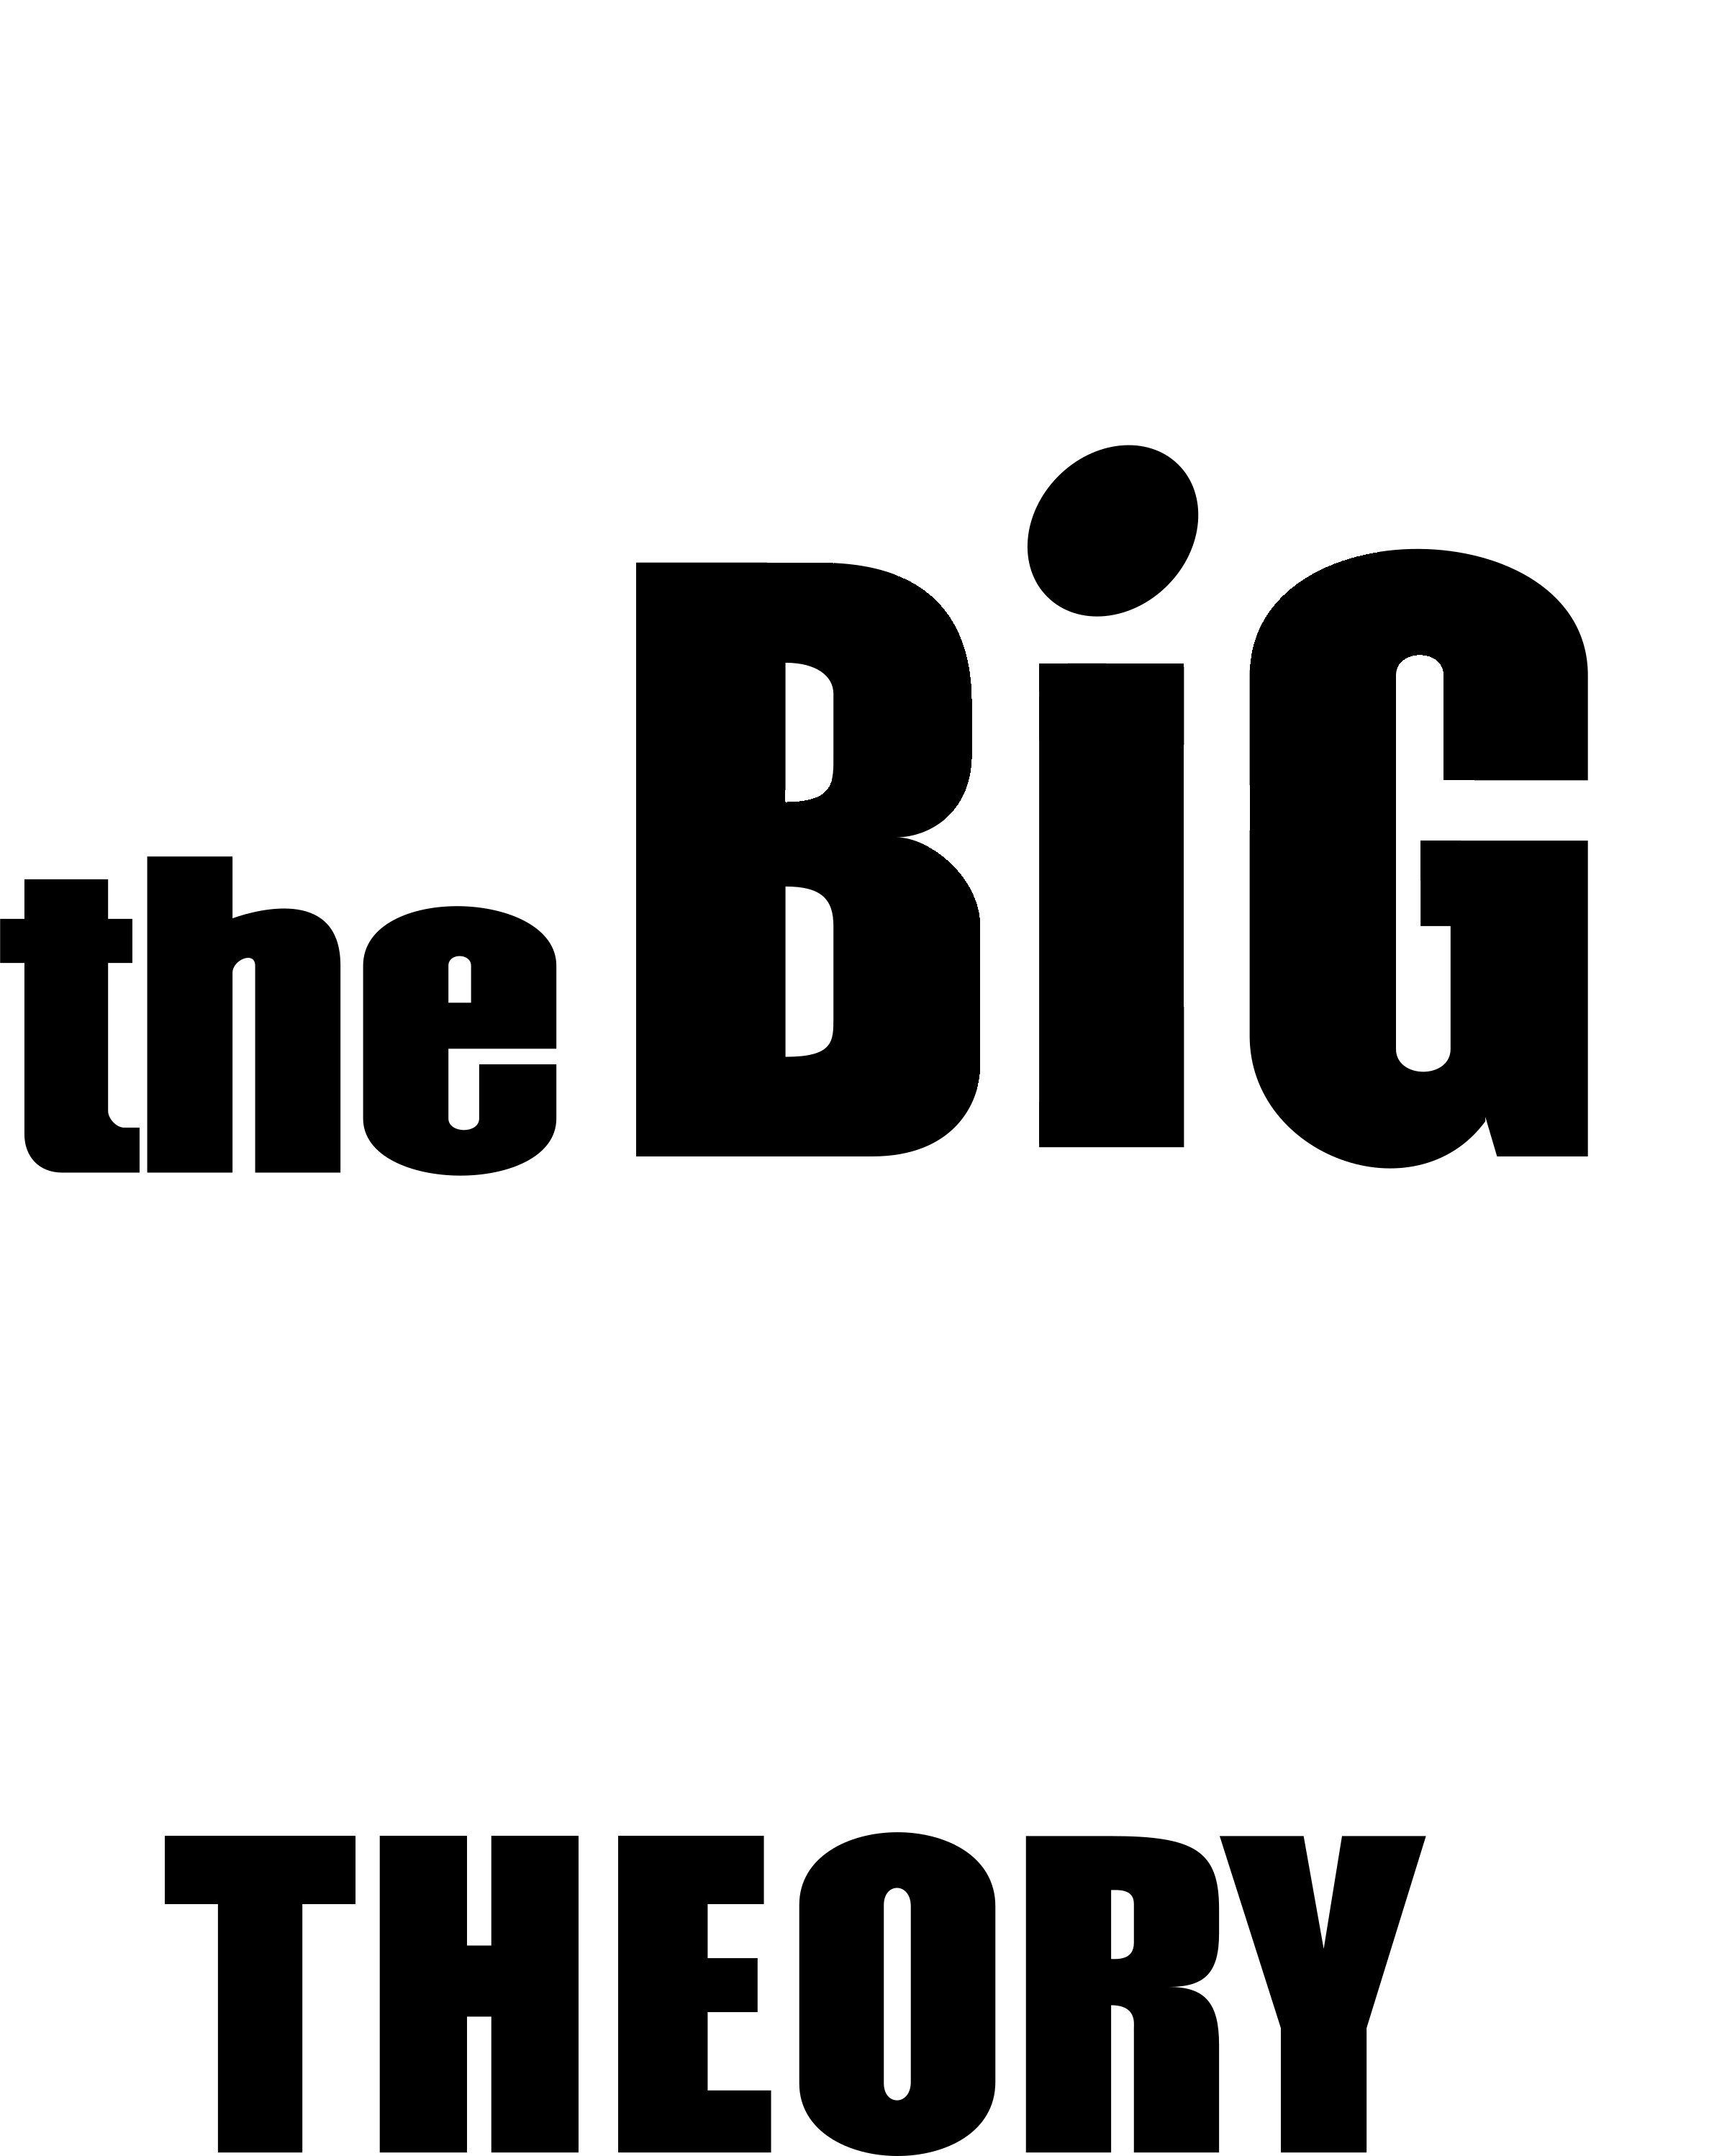 The Big Bang Theory Logo PNG Kostenloser Download